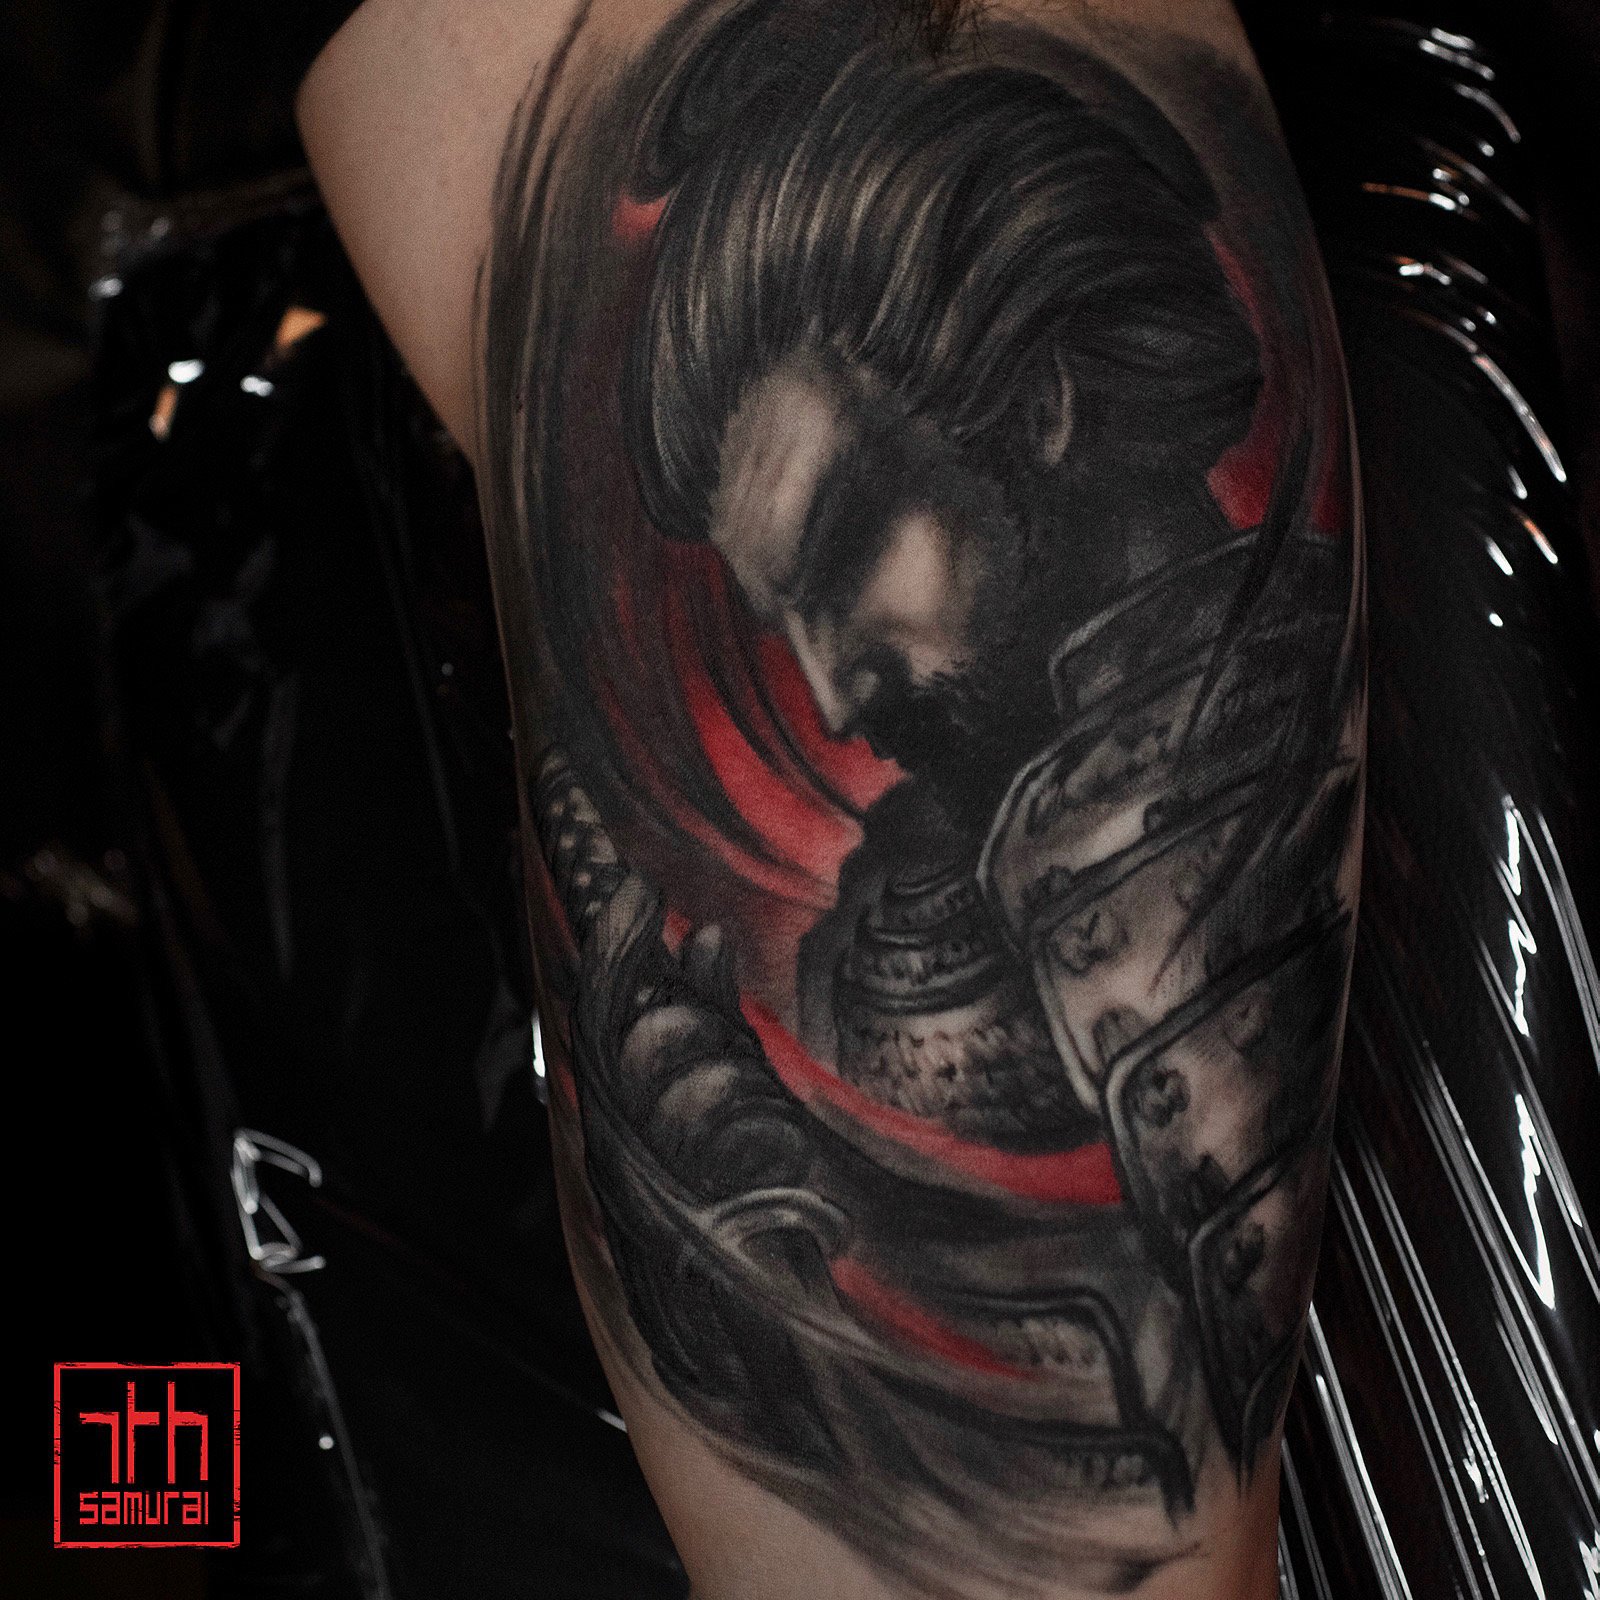 Japanese Samurai Men's bicep tattoo with red highlights artist: Kai at 7th Samurai. YEG Edmonton Alberta Canada 2020